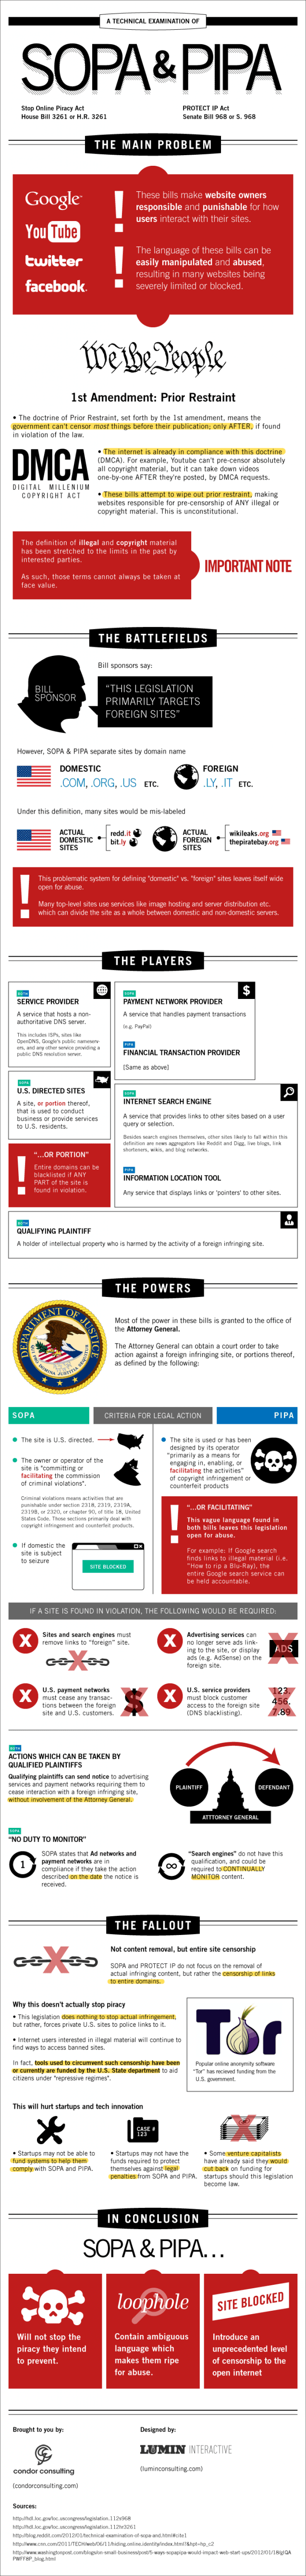 SOPA & PIPA Infographic